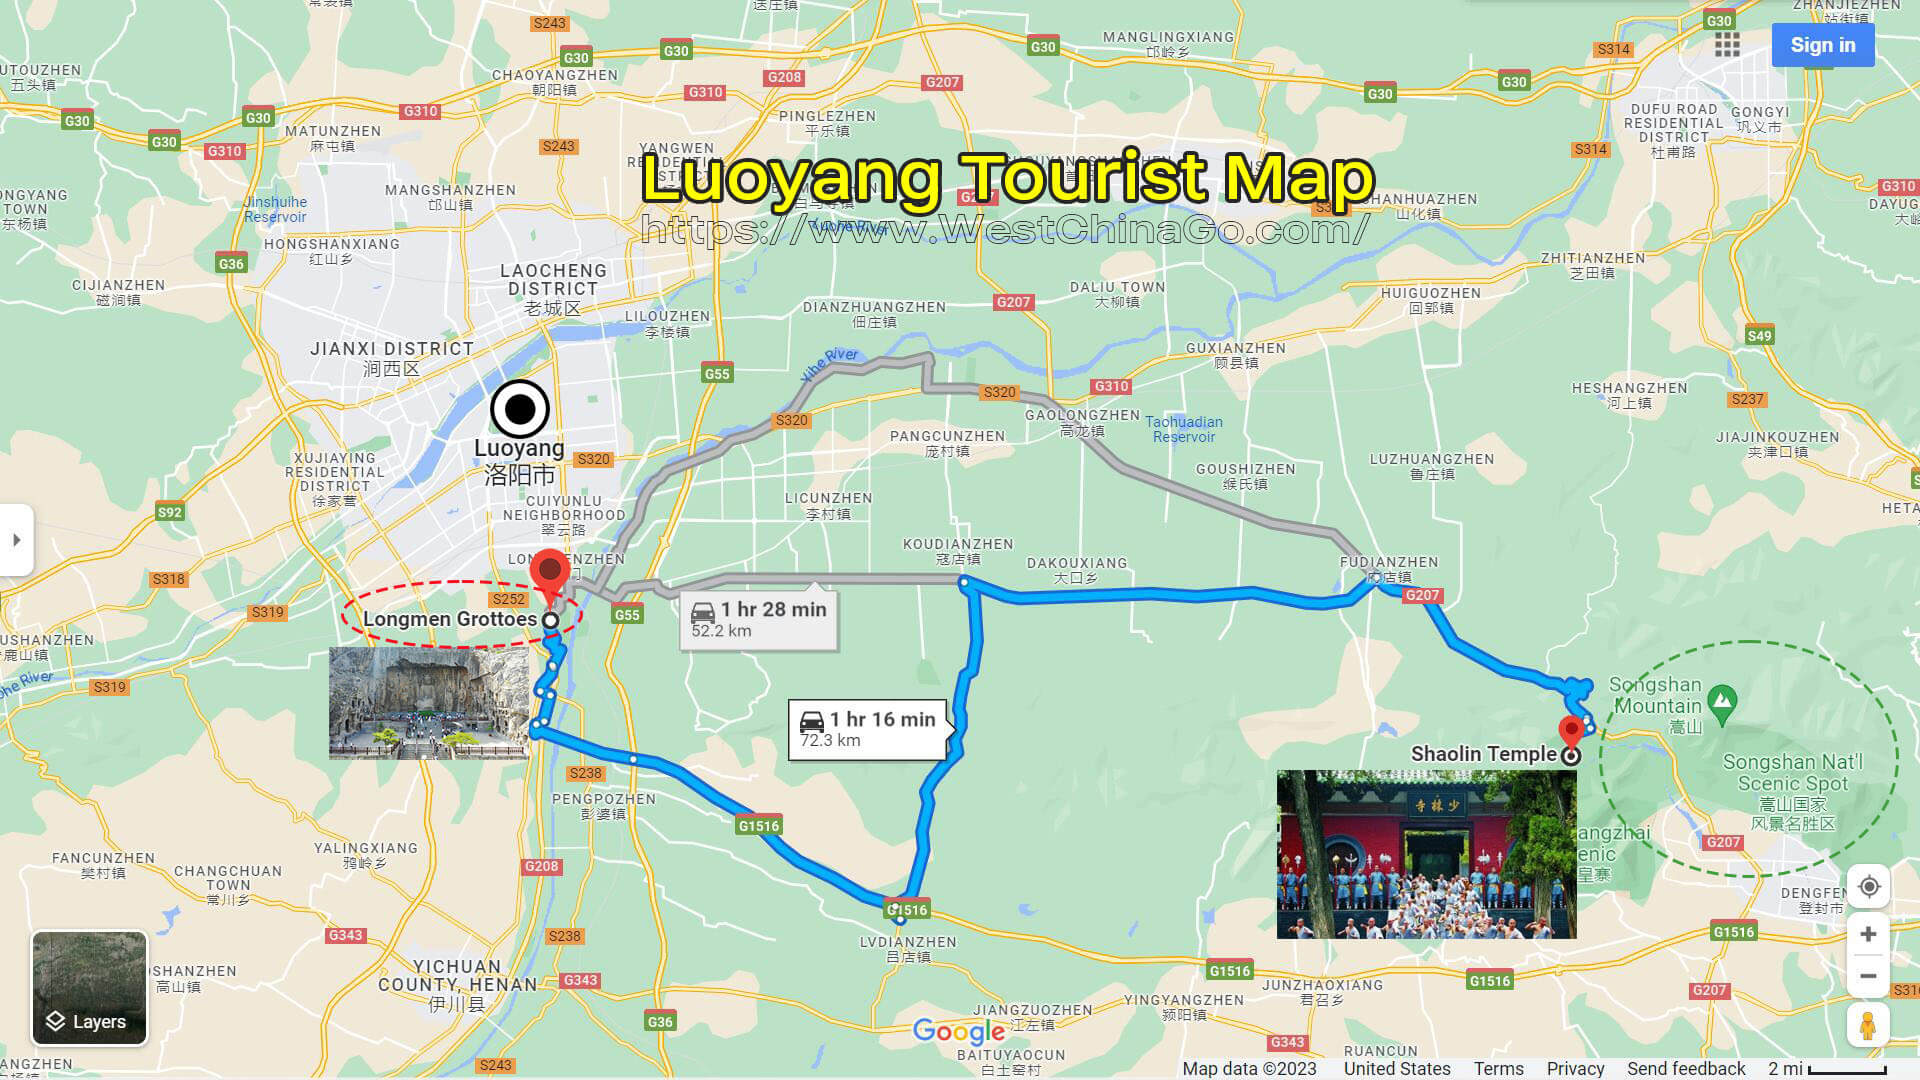 Henan Shaolin Temple Tourist Map